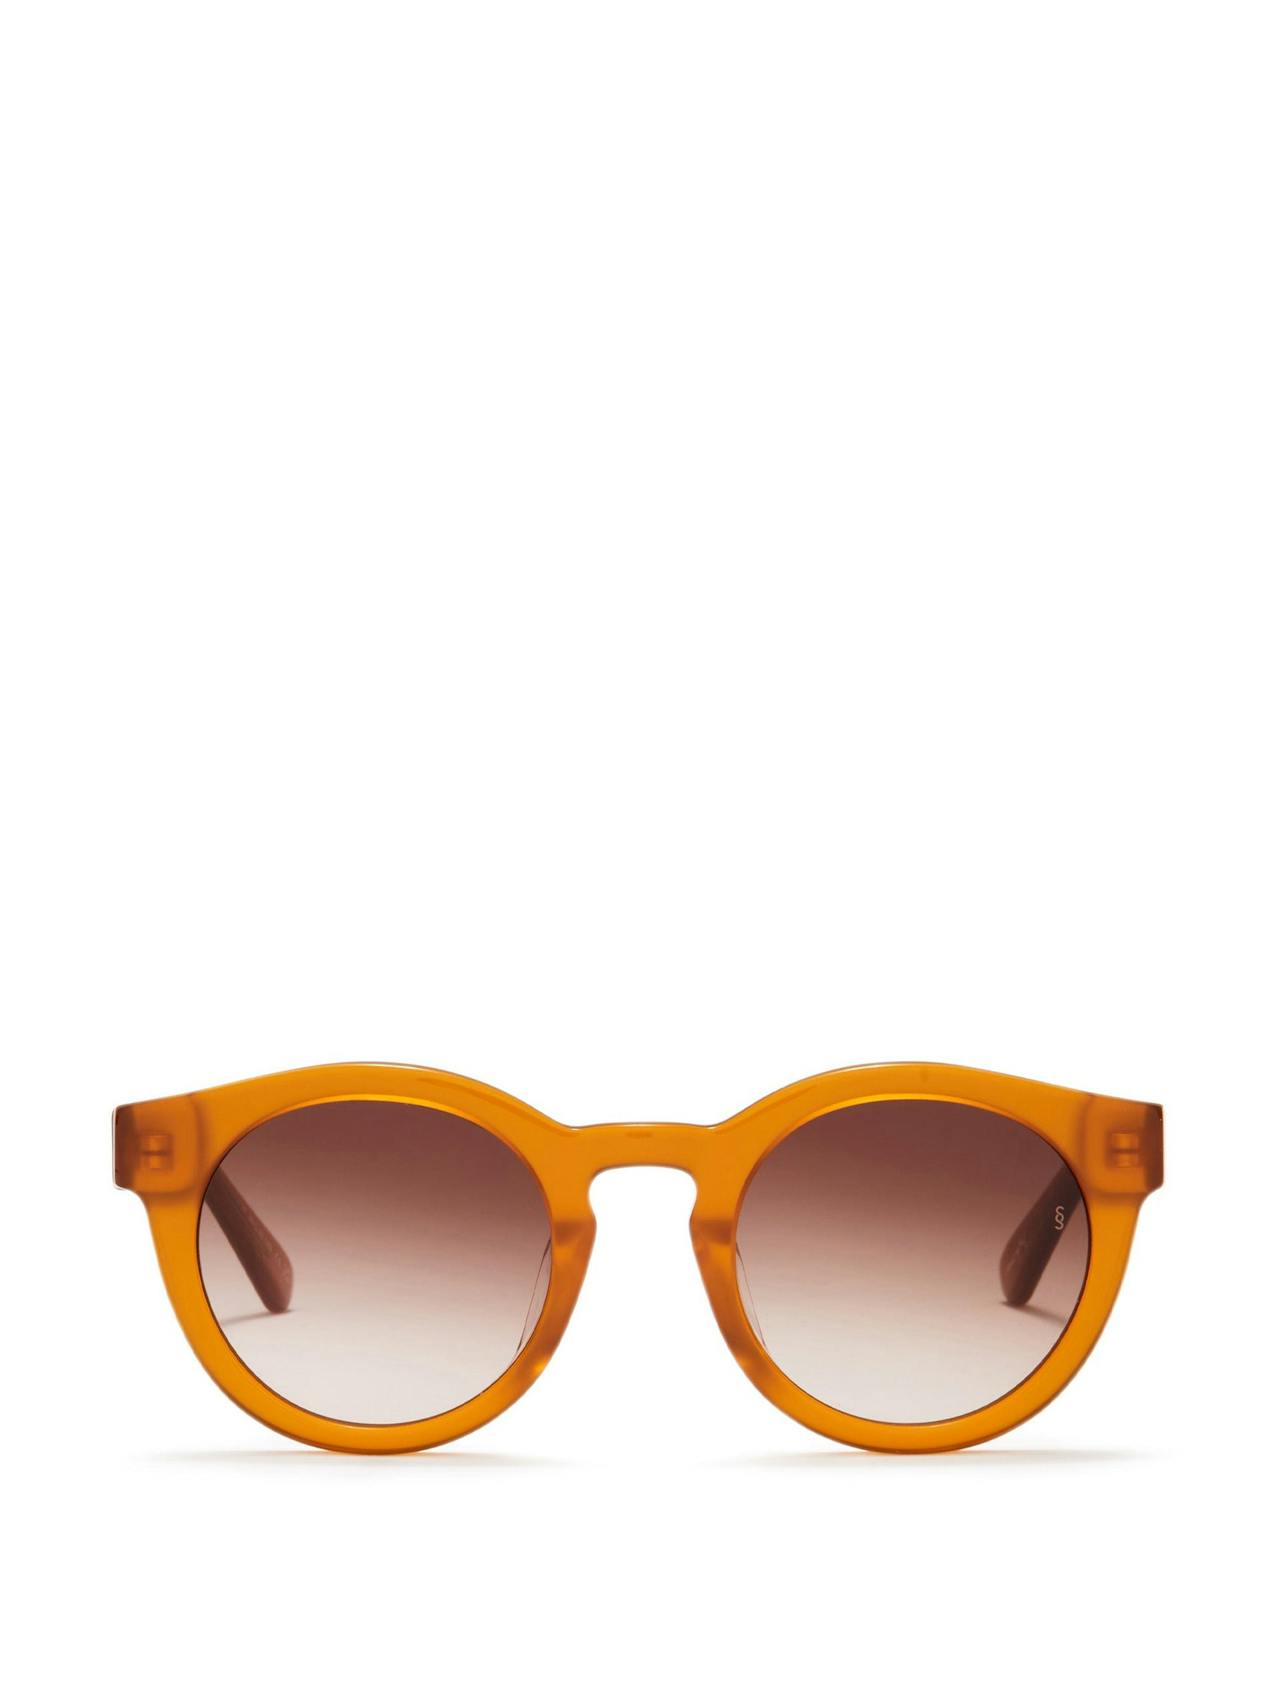 Honeycomb Soelae sunglasses